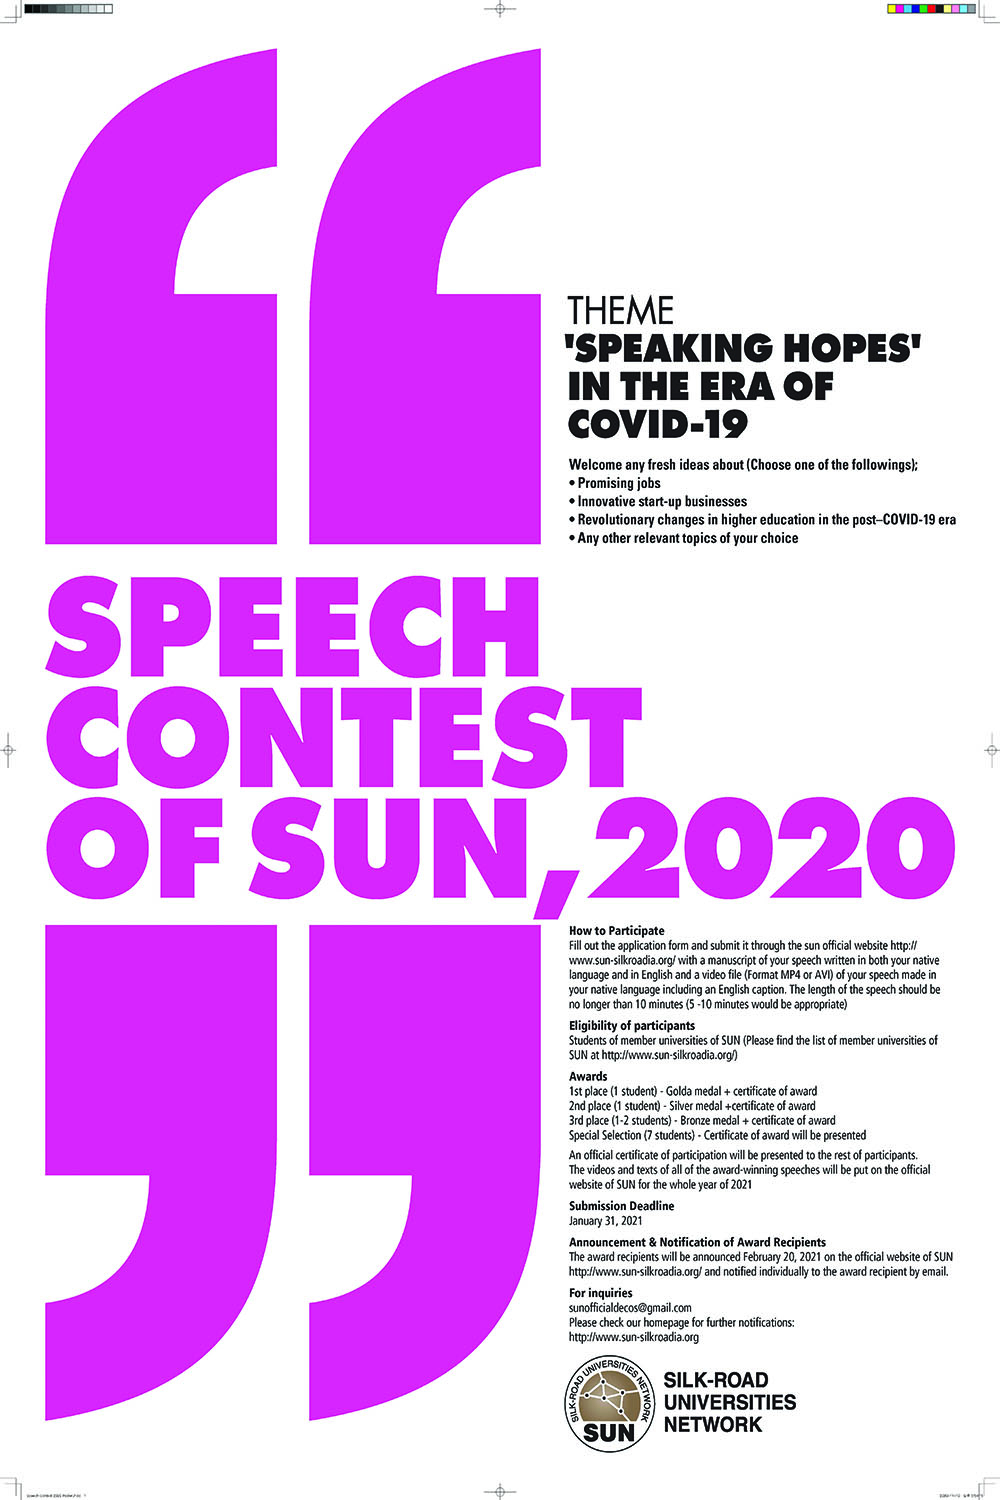 Speech Contest of SUN, 2020